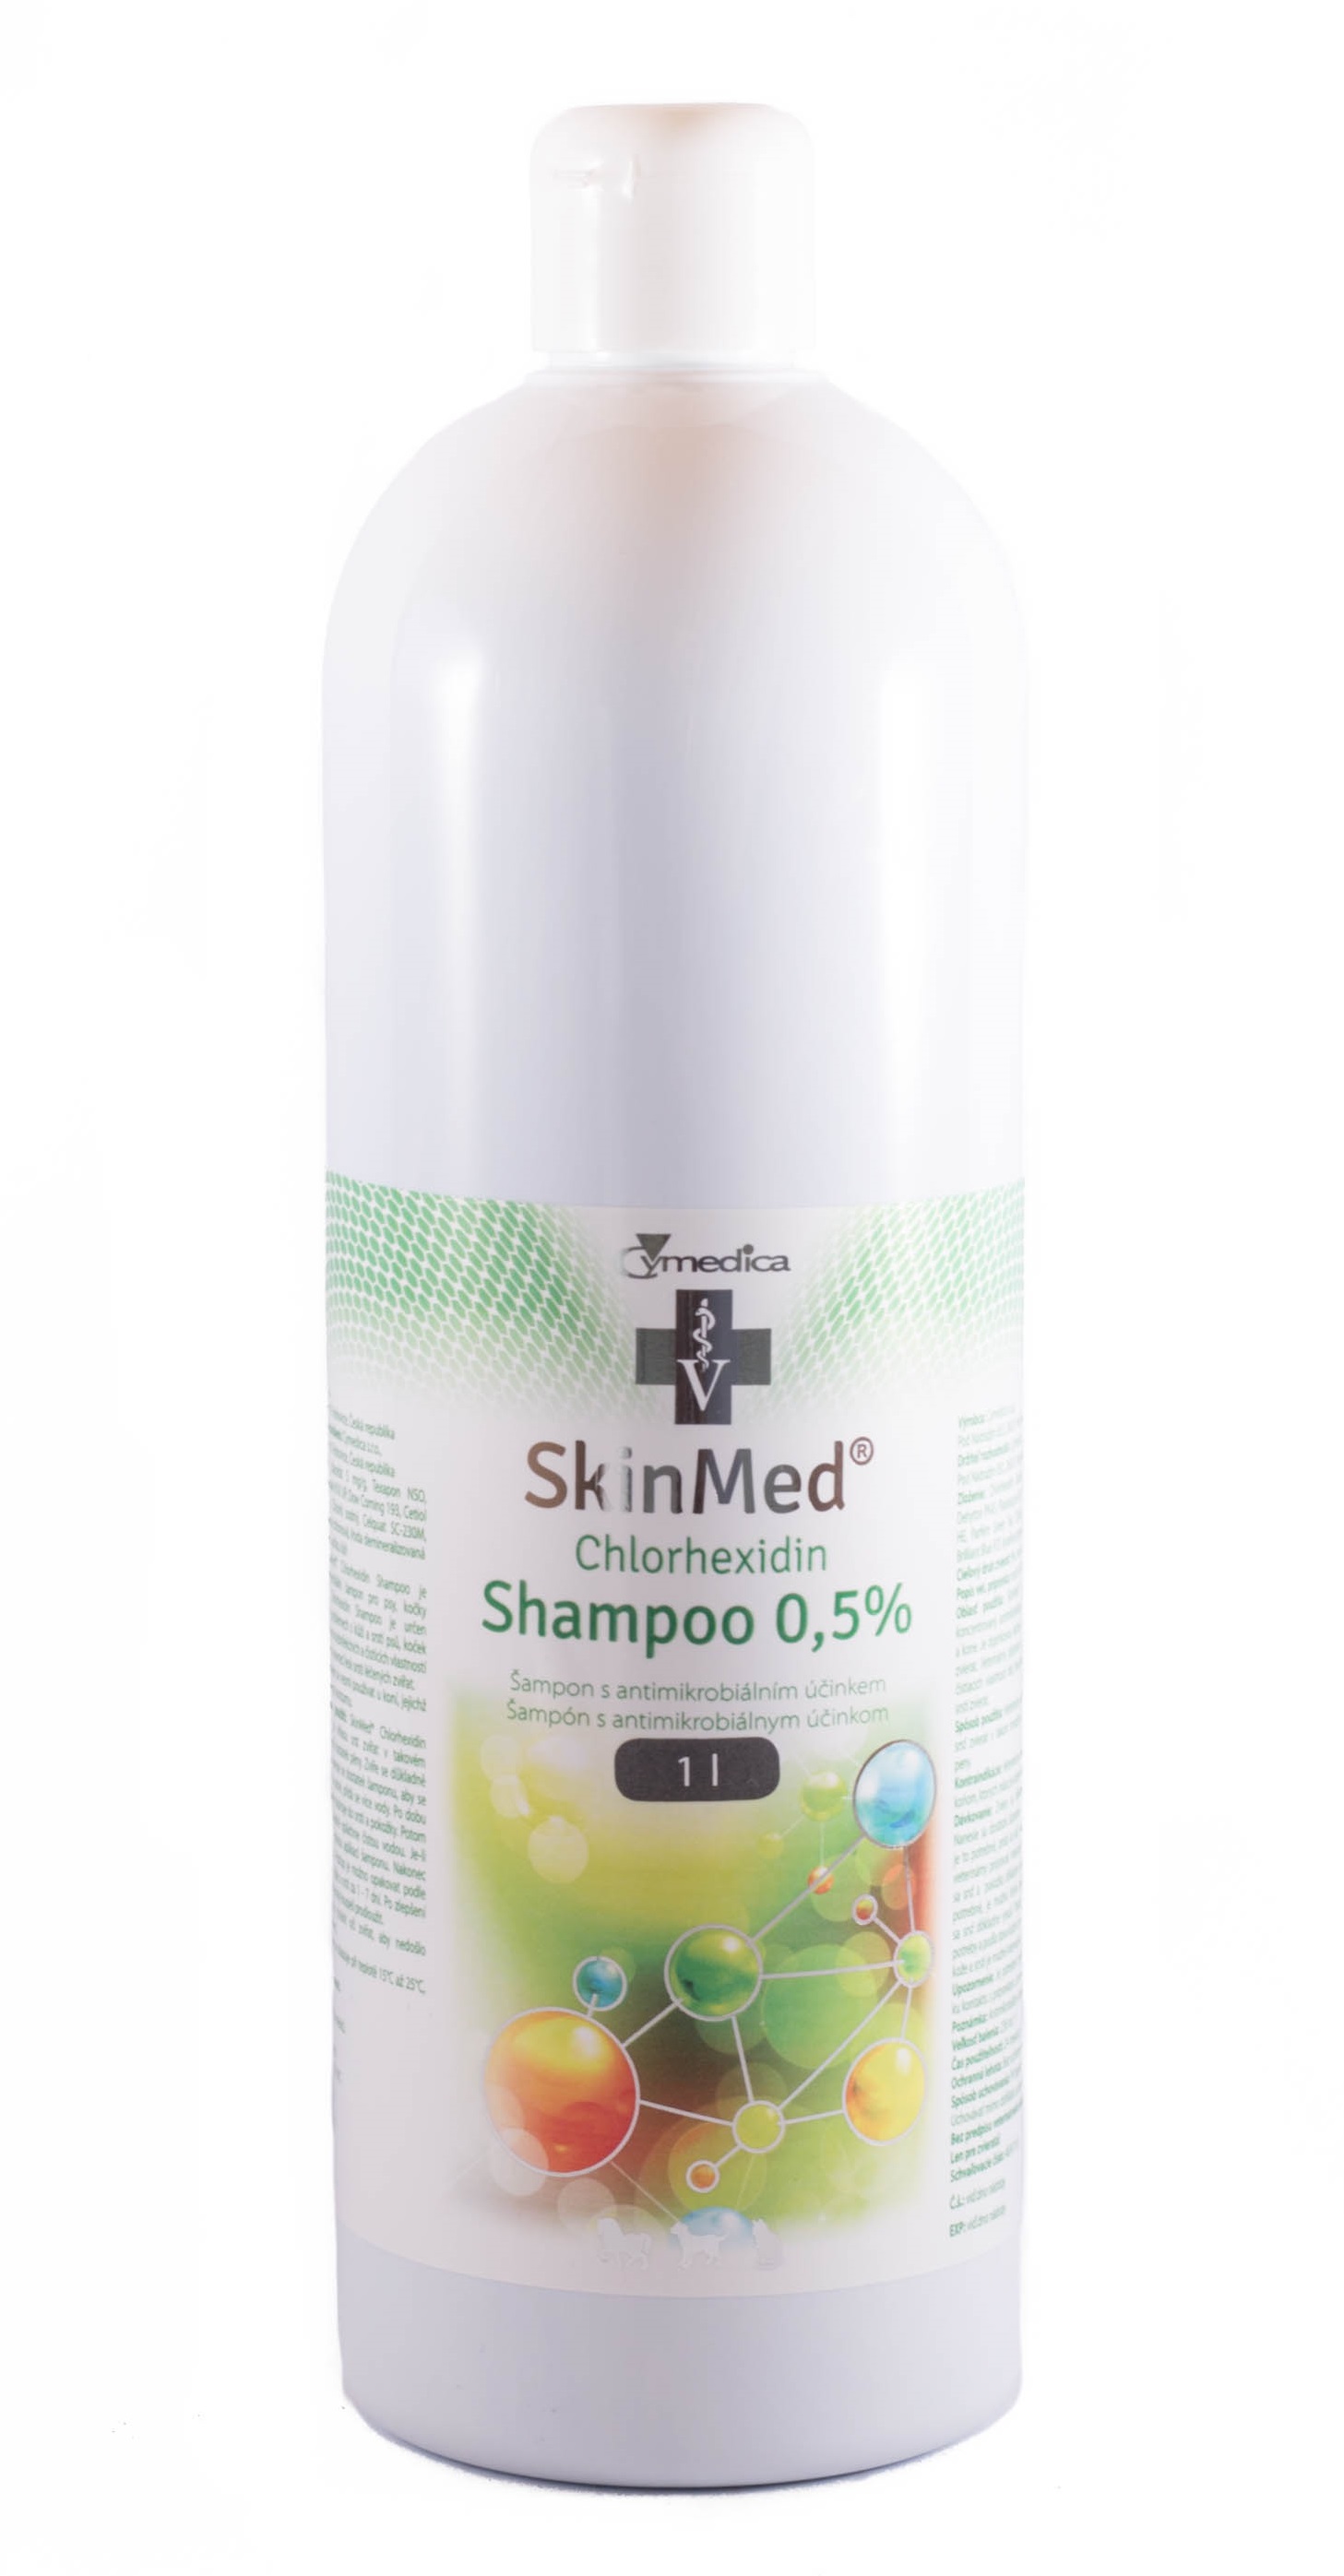 SkinMed Chlorhexidin Shampoo 0,5% 1 liter